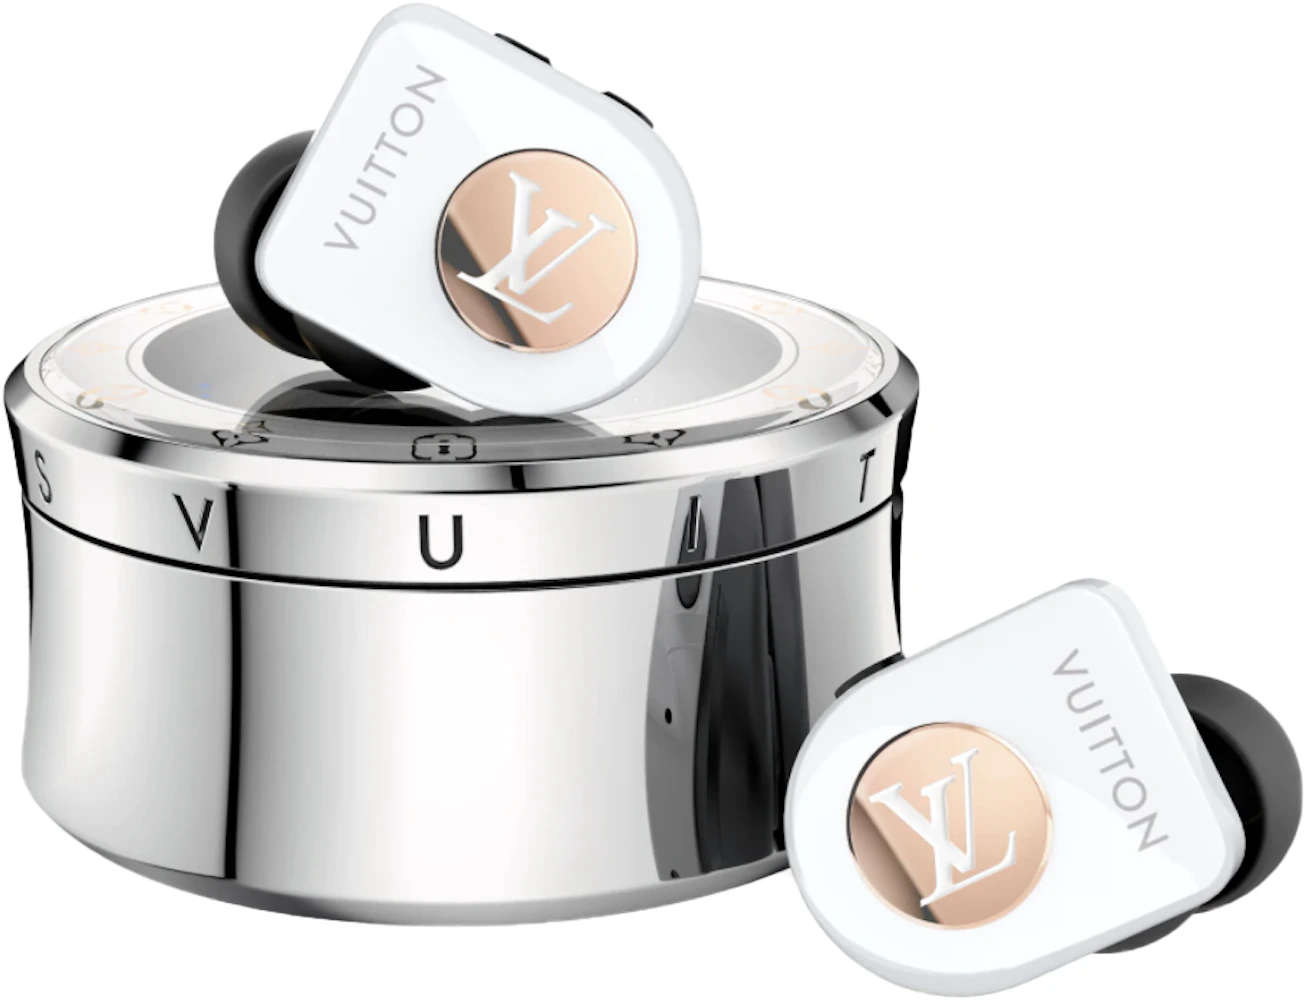 Louis Vuitton releases new Gradient Blue wireless headphones